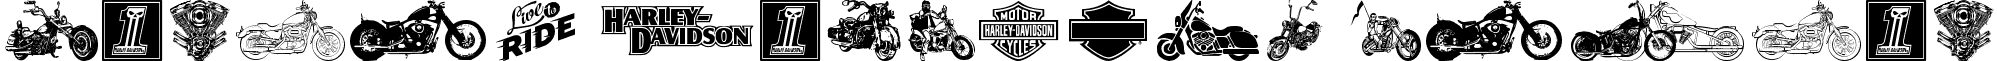 Harley Davidson Regular Harley_Davidson.ttf